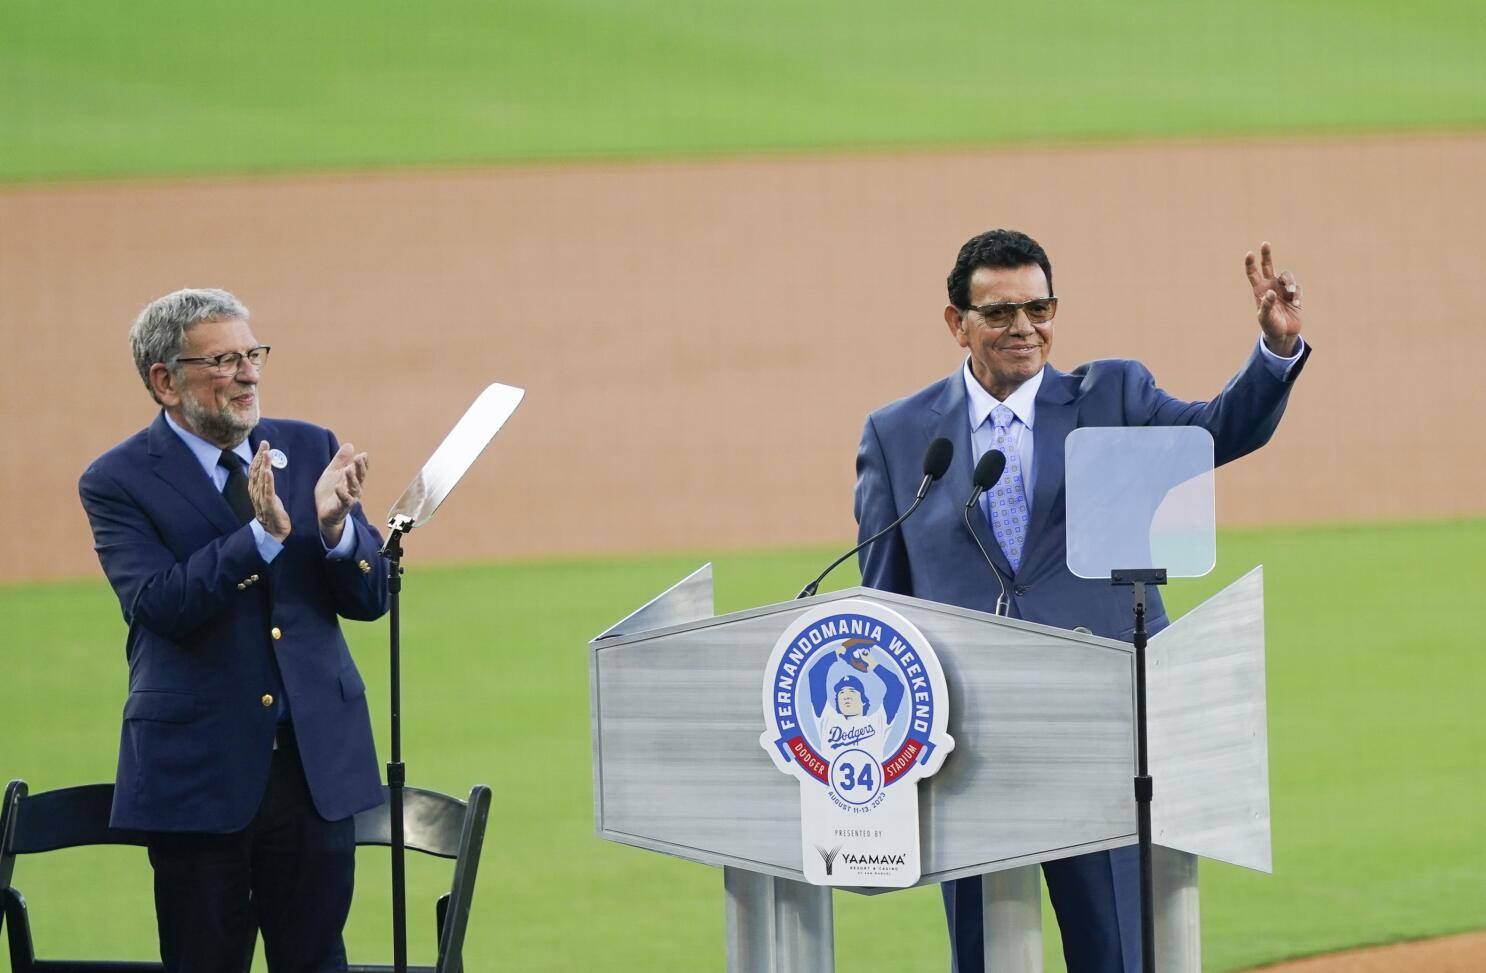 Fernando Valenzuela changing Dodger baseball, by Isaiahlonvelin